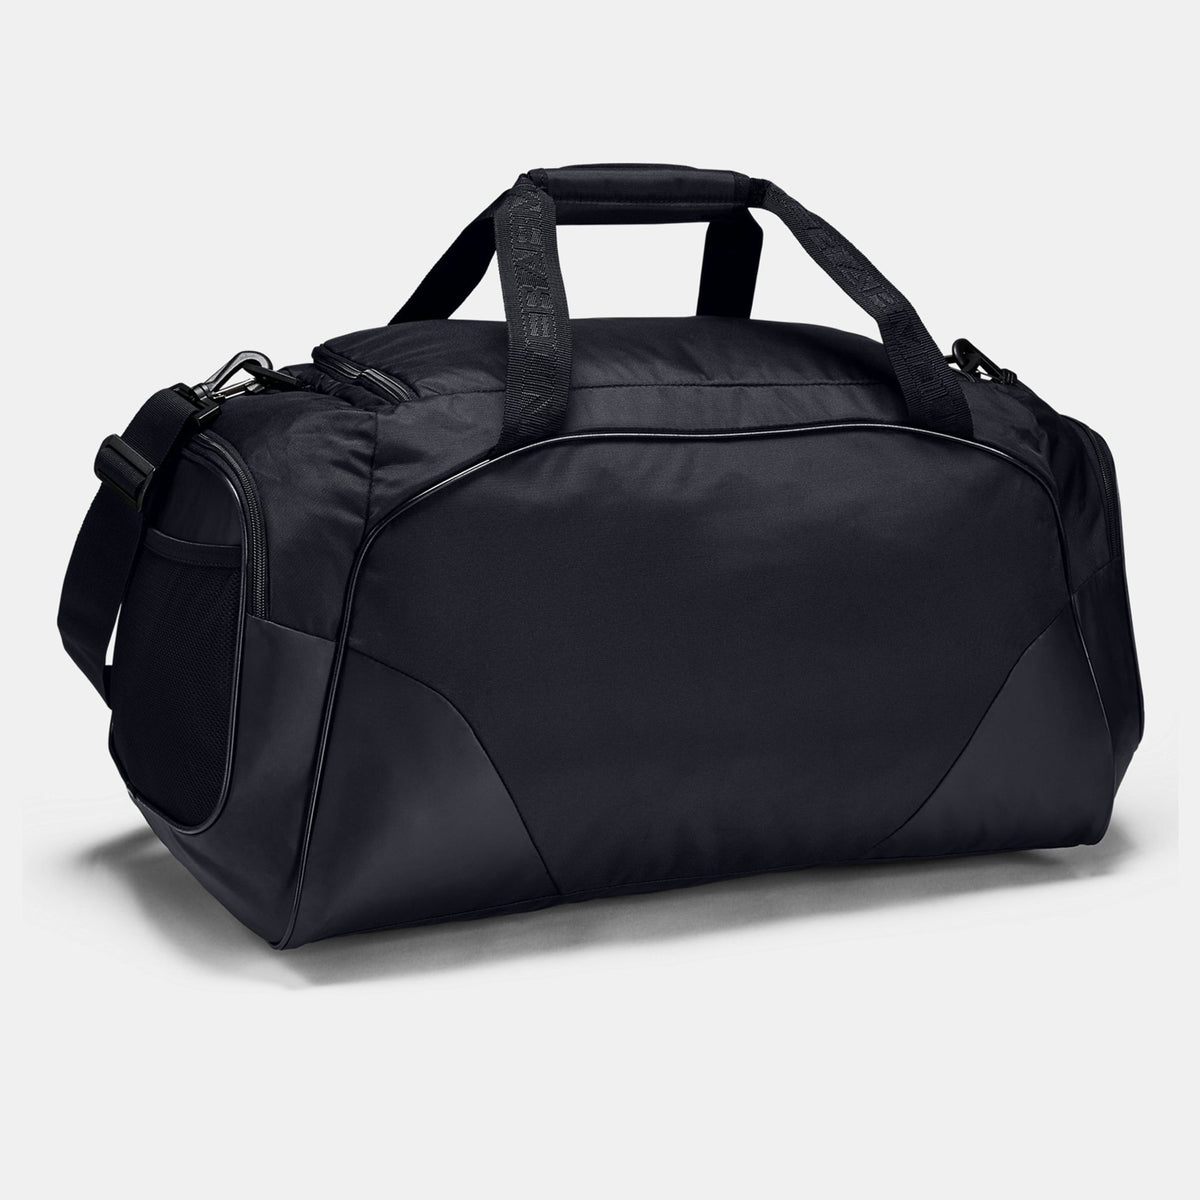 Under Armour Undeniable 3.0 Medium Duffel Bag: Black